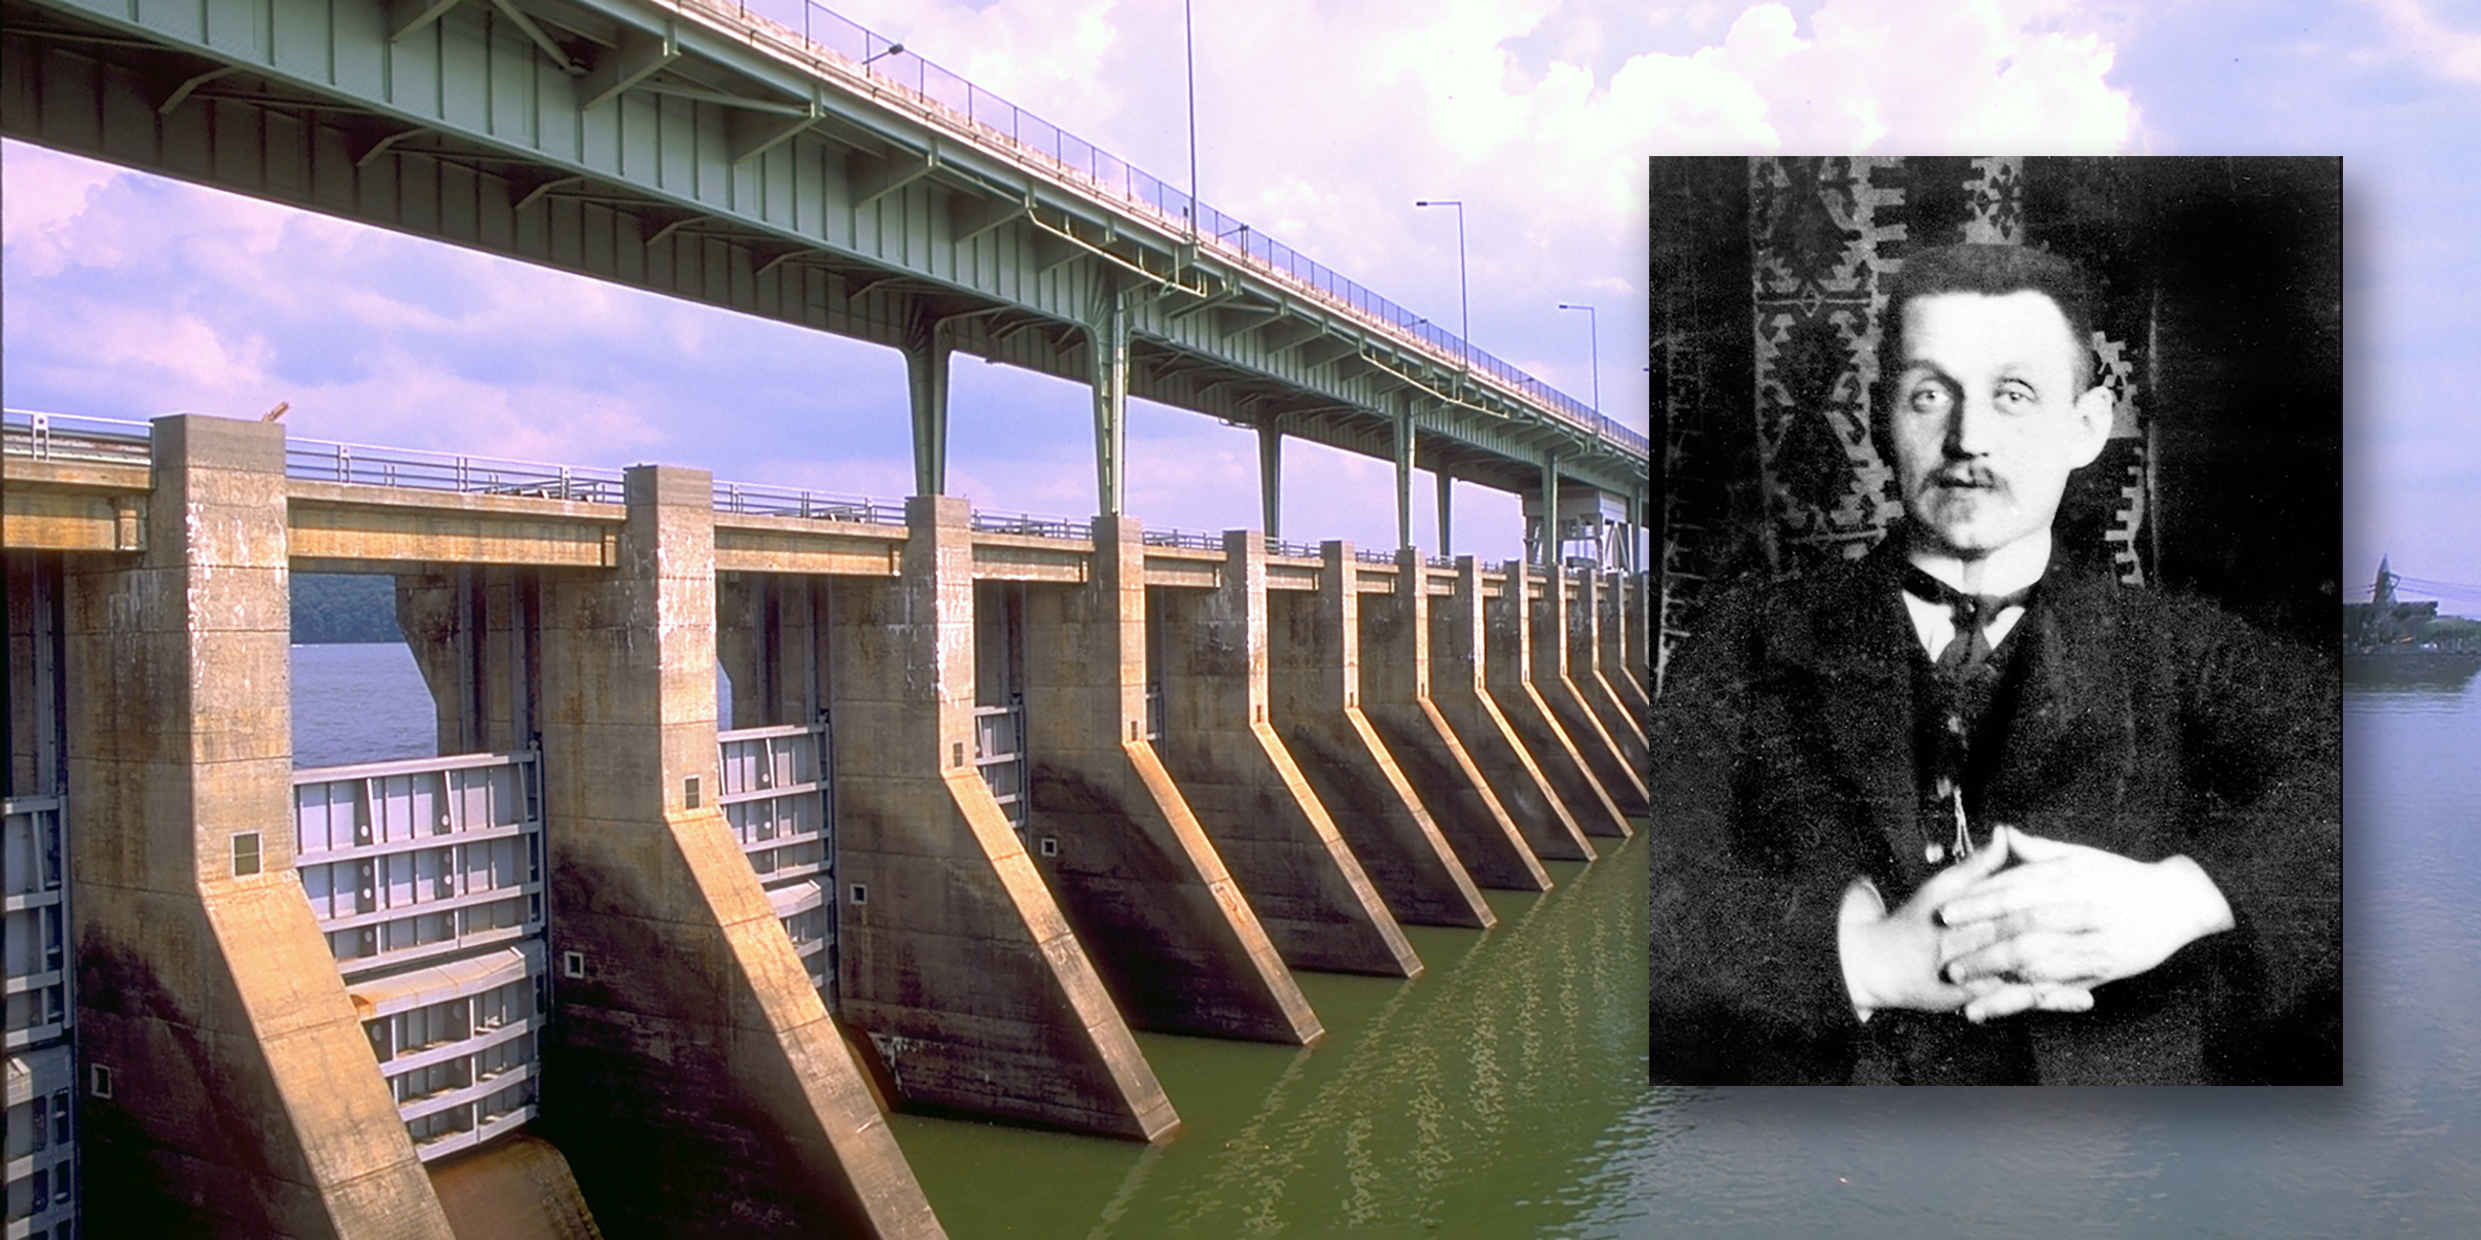 Image of Chickamauga Dam with inset image of Peter Palchinsky